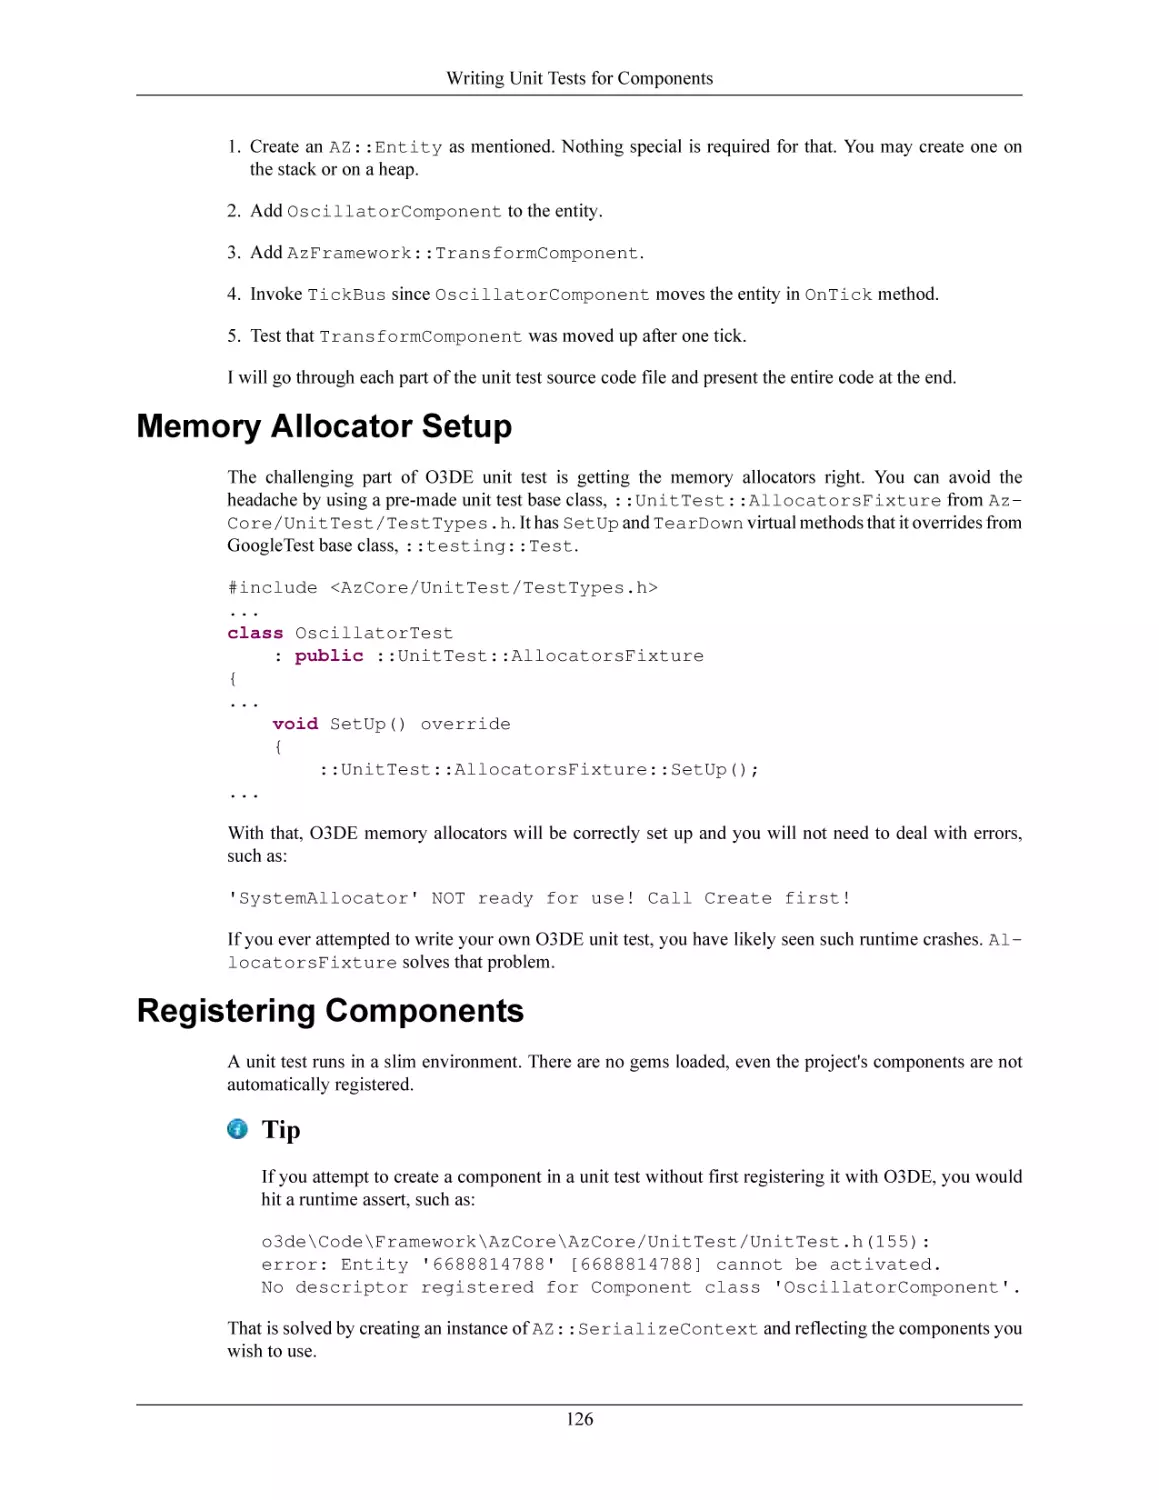 Memory Allocator Setup
Registering Components